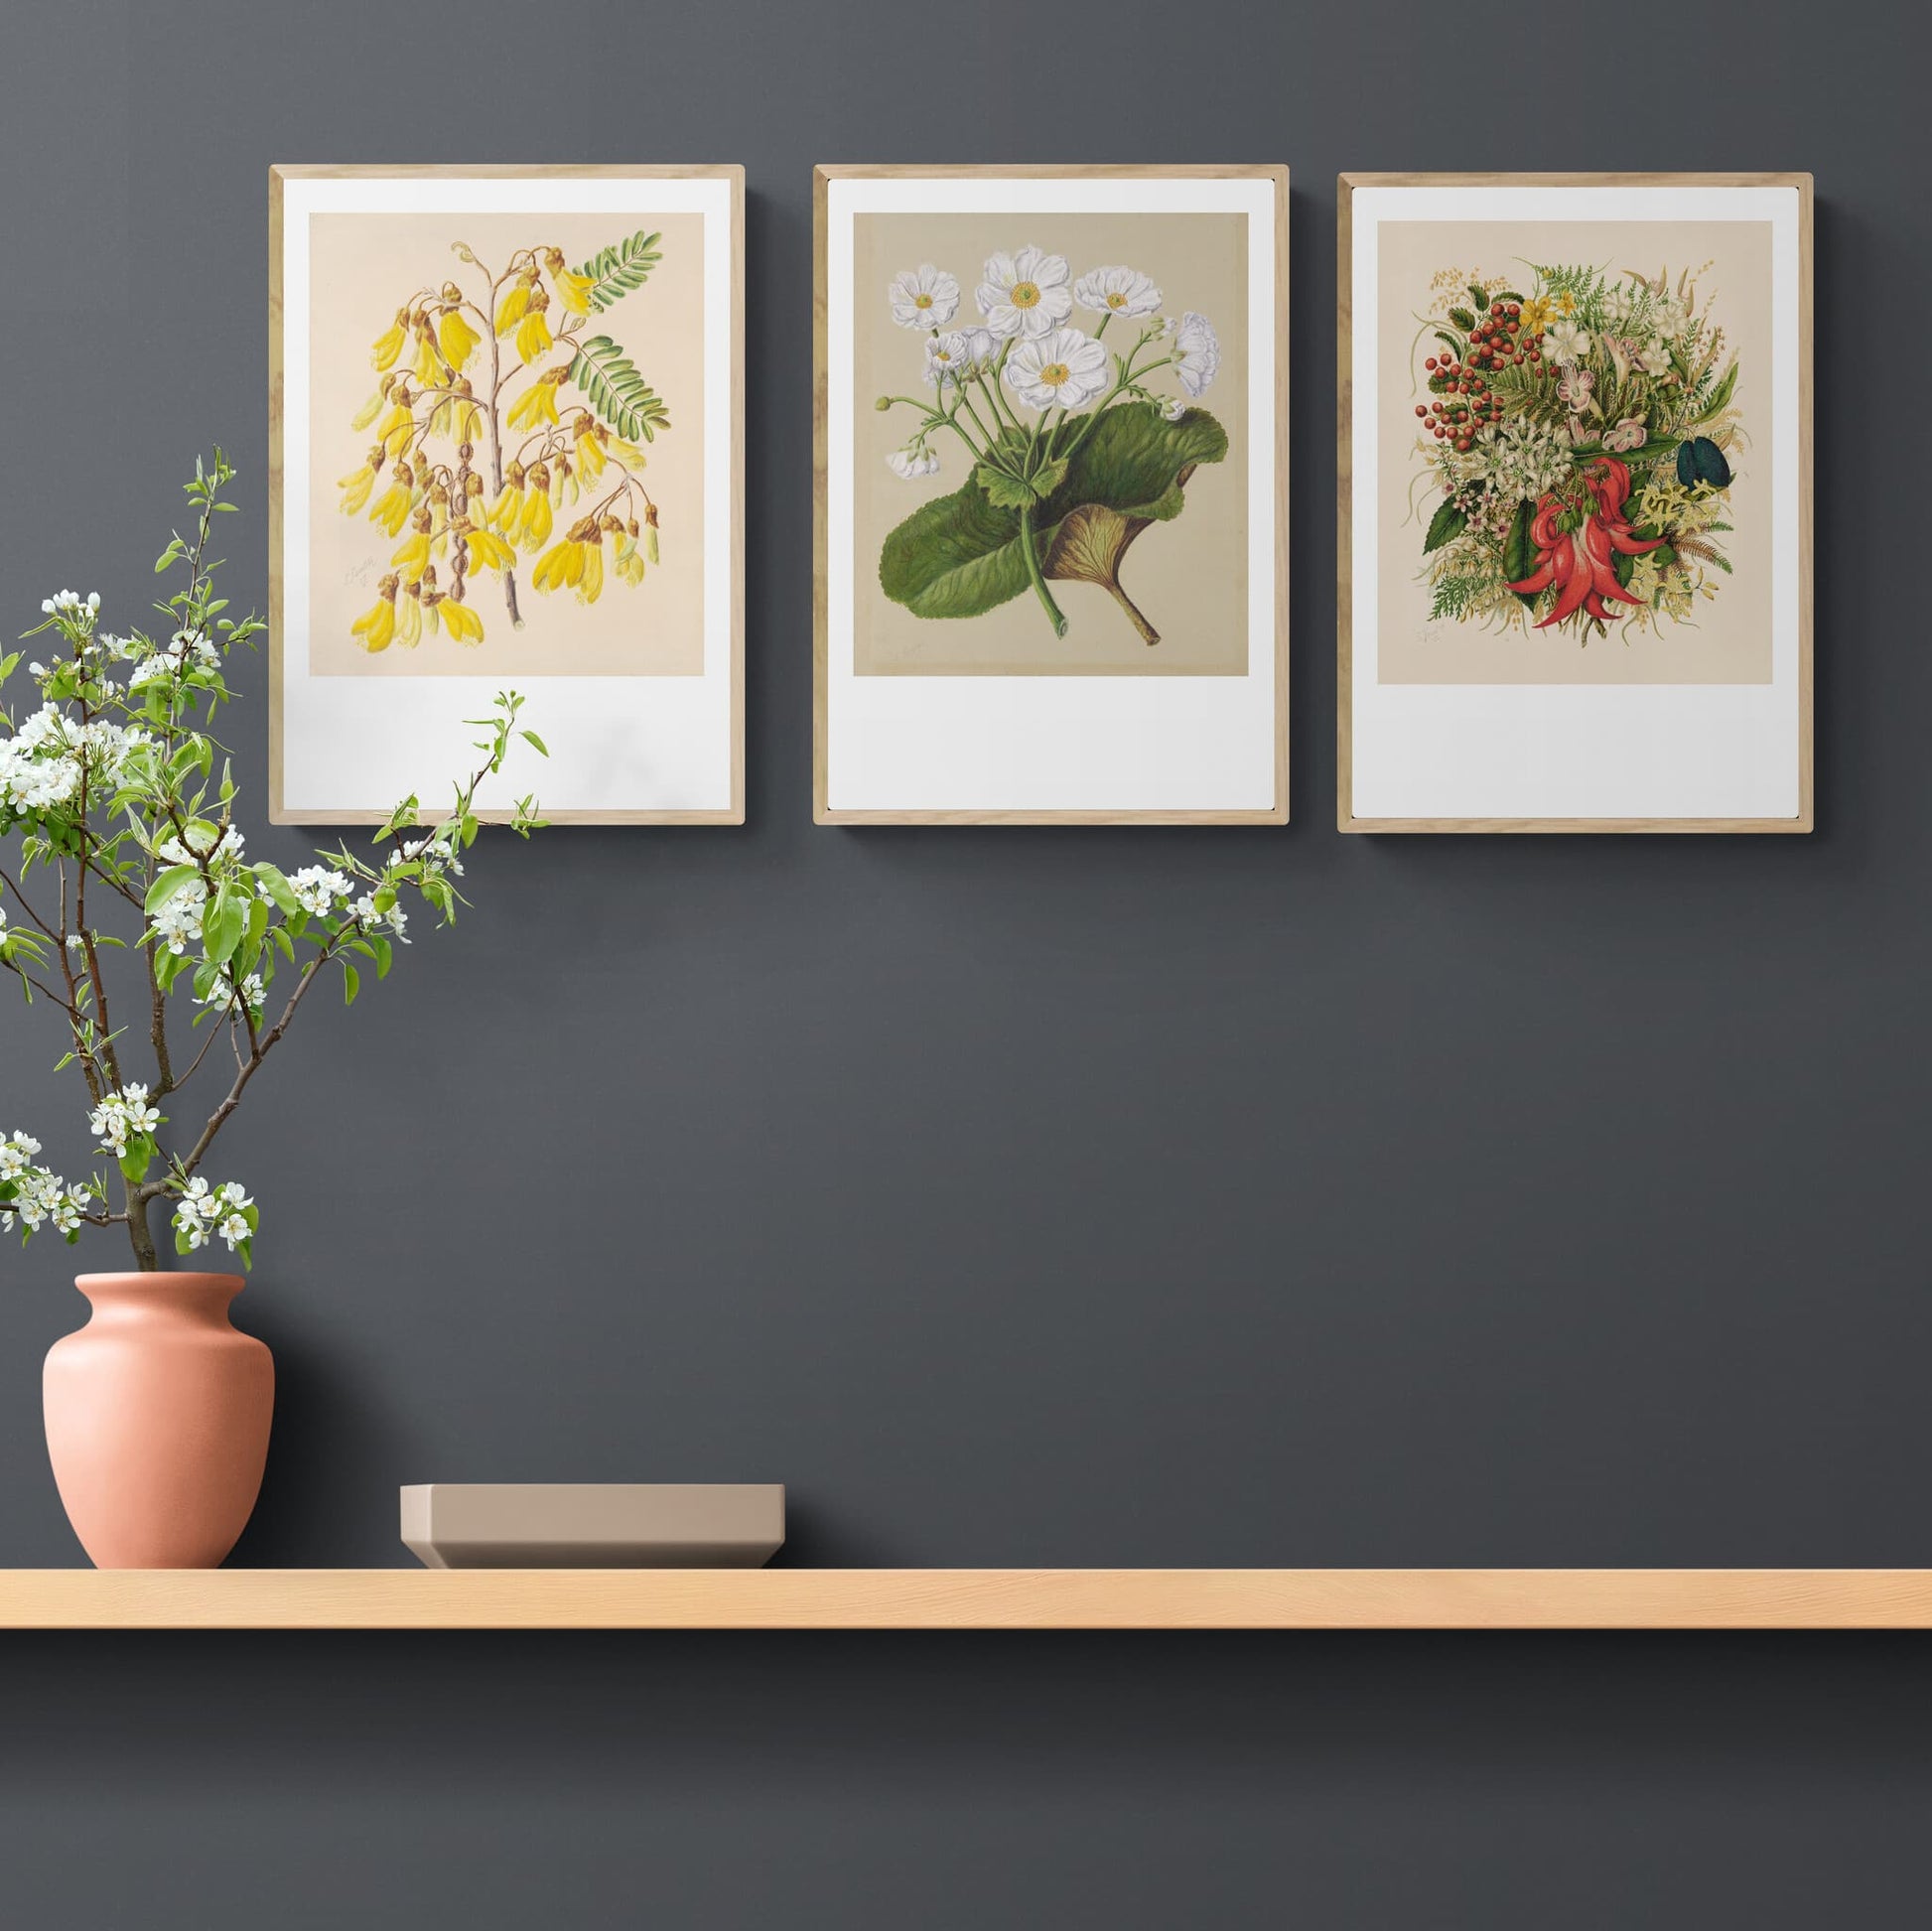 Group of three botanical prints hanging on wall